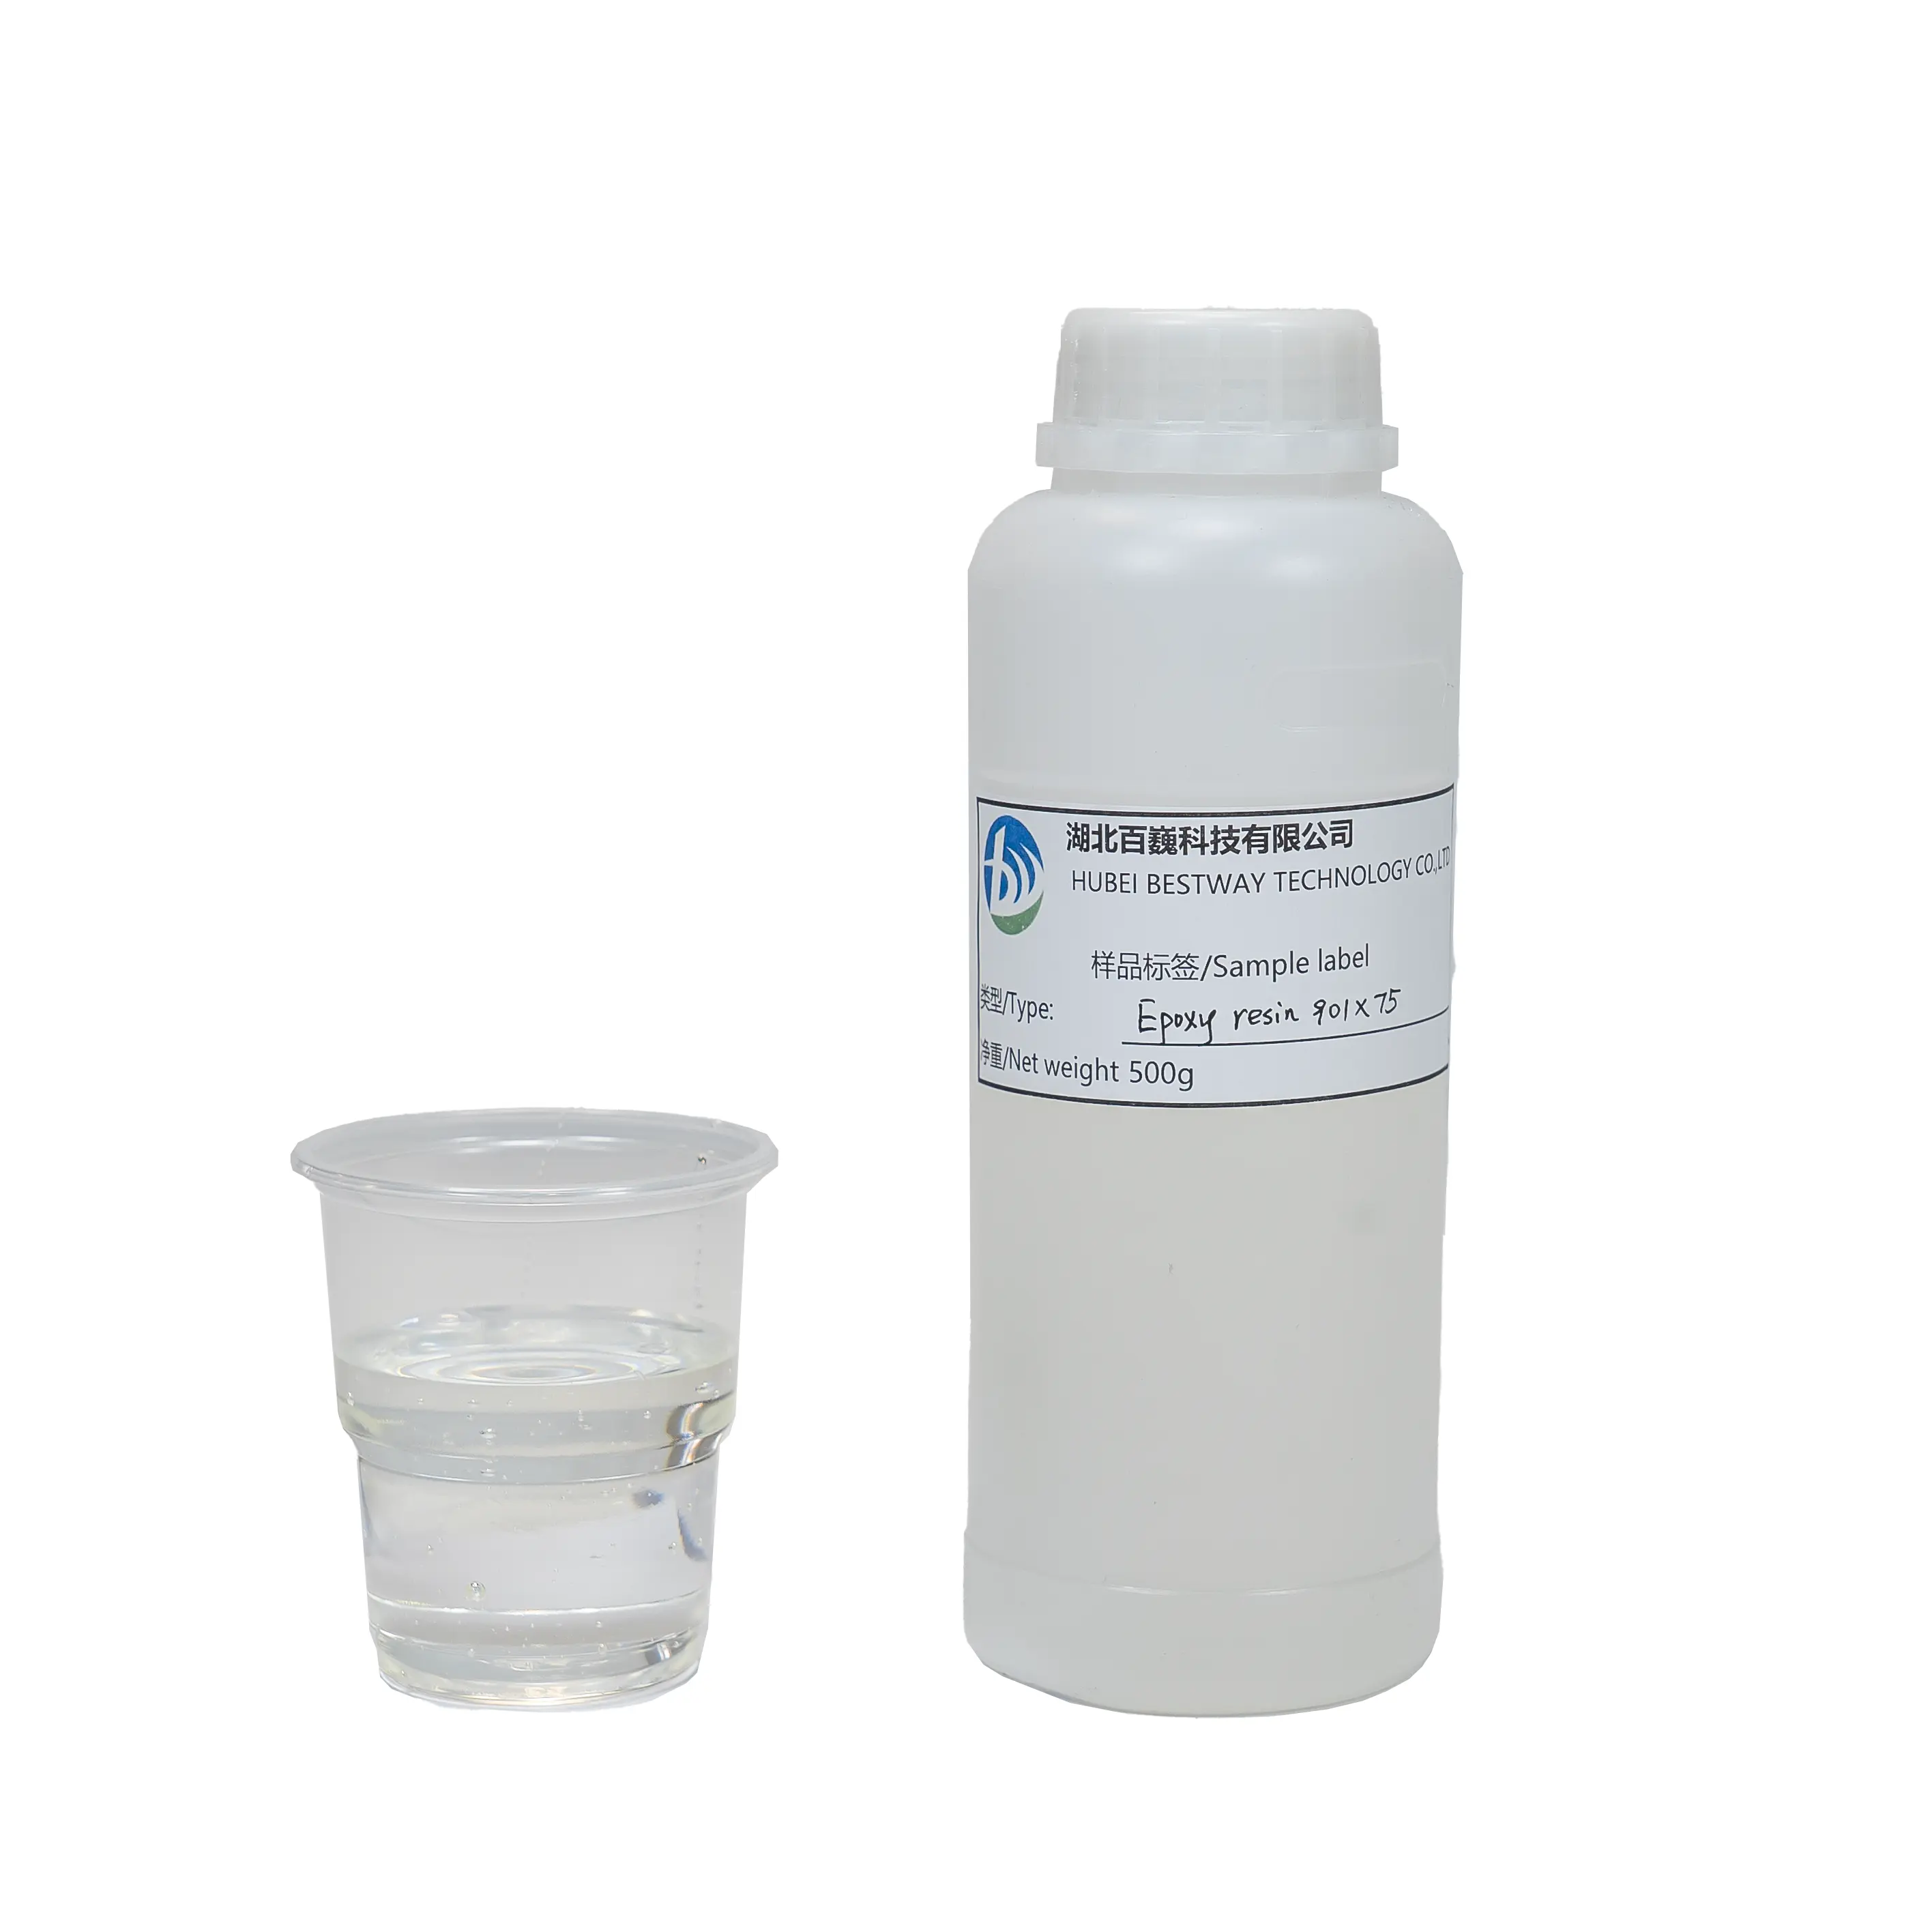 Resina epóxi líquida 901*75 Resina epóxi 901(75%)+ xileno (25%)// Revestimentos anti-corrosão